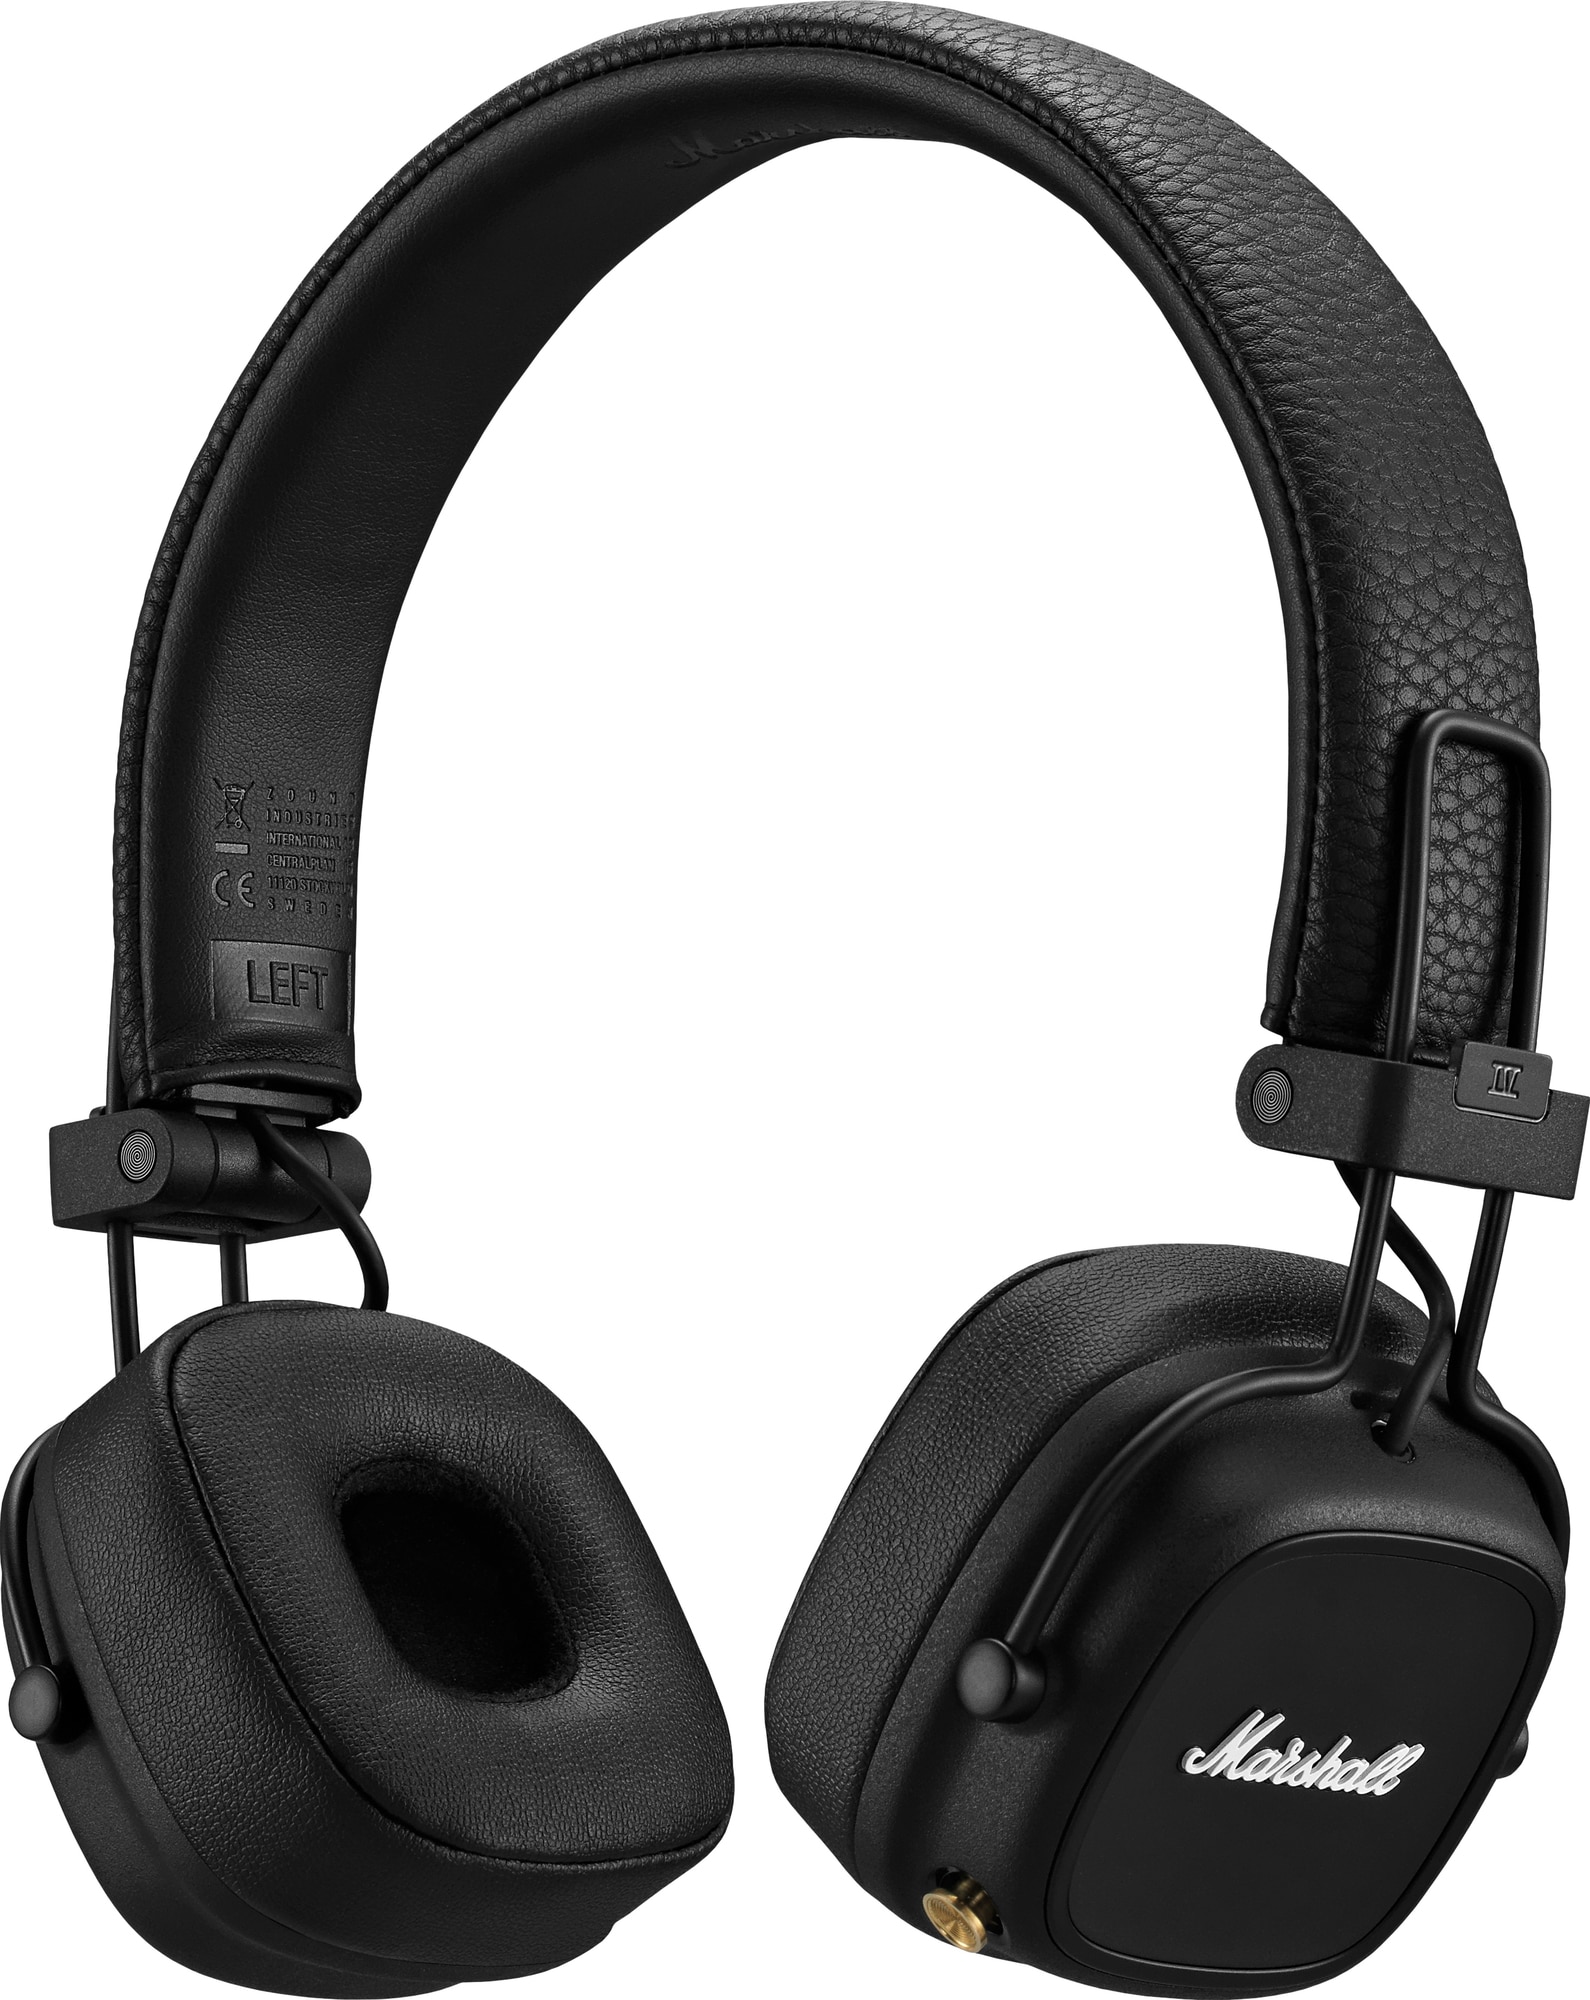 Marshall Major IV trådløse on-ear høretelefoner (sort) | Elgiganten